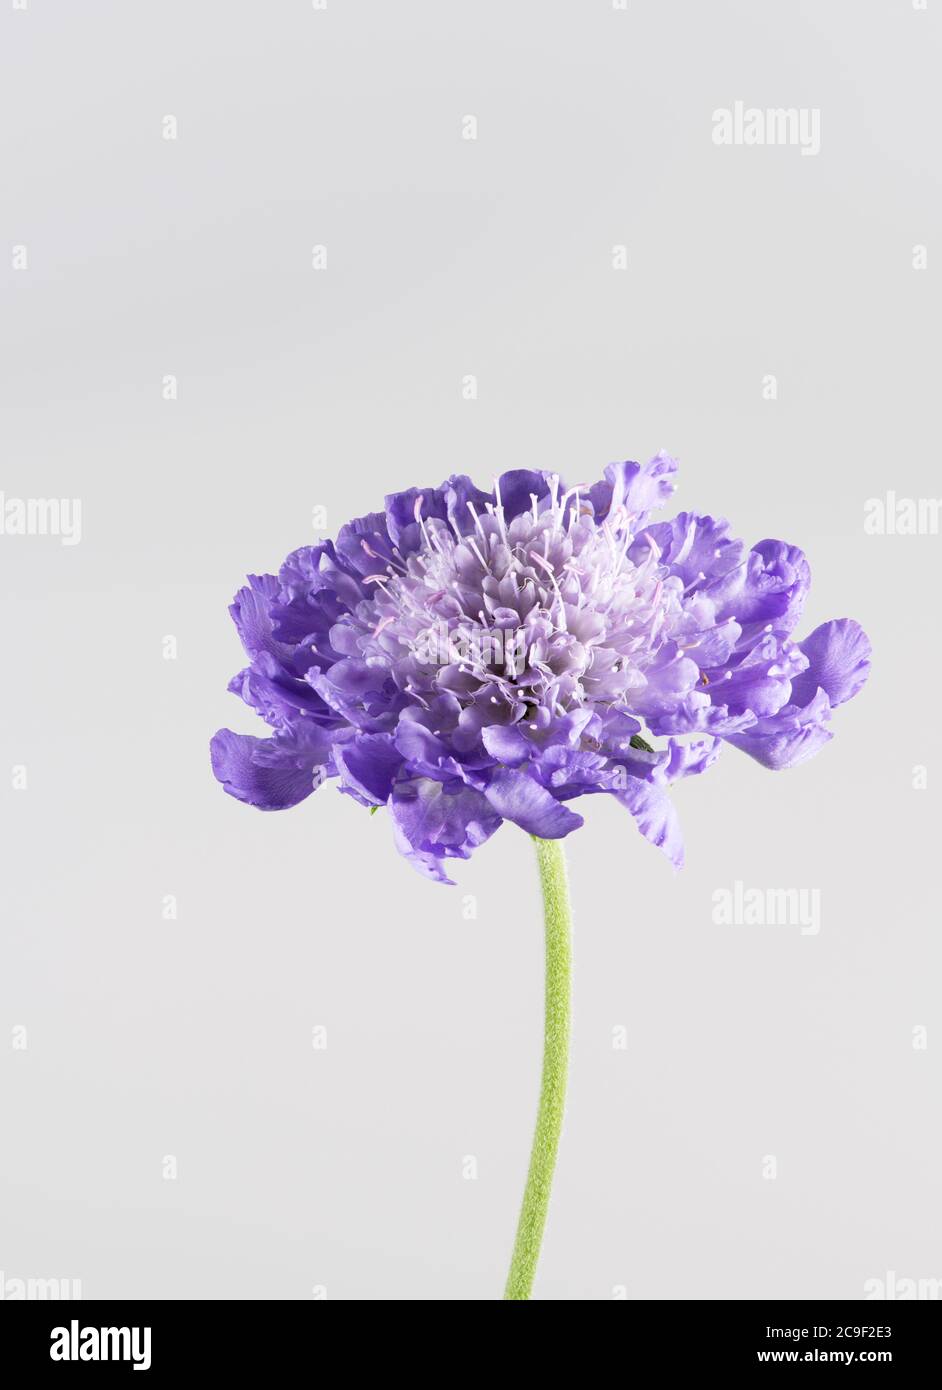 Single blue Scabious flower against a plain white background Stock Photo